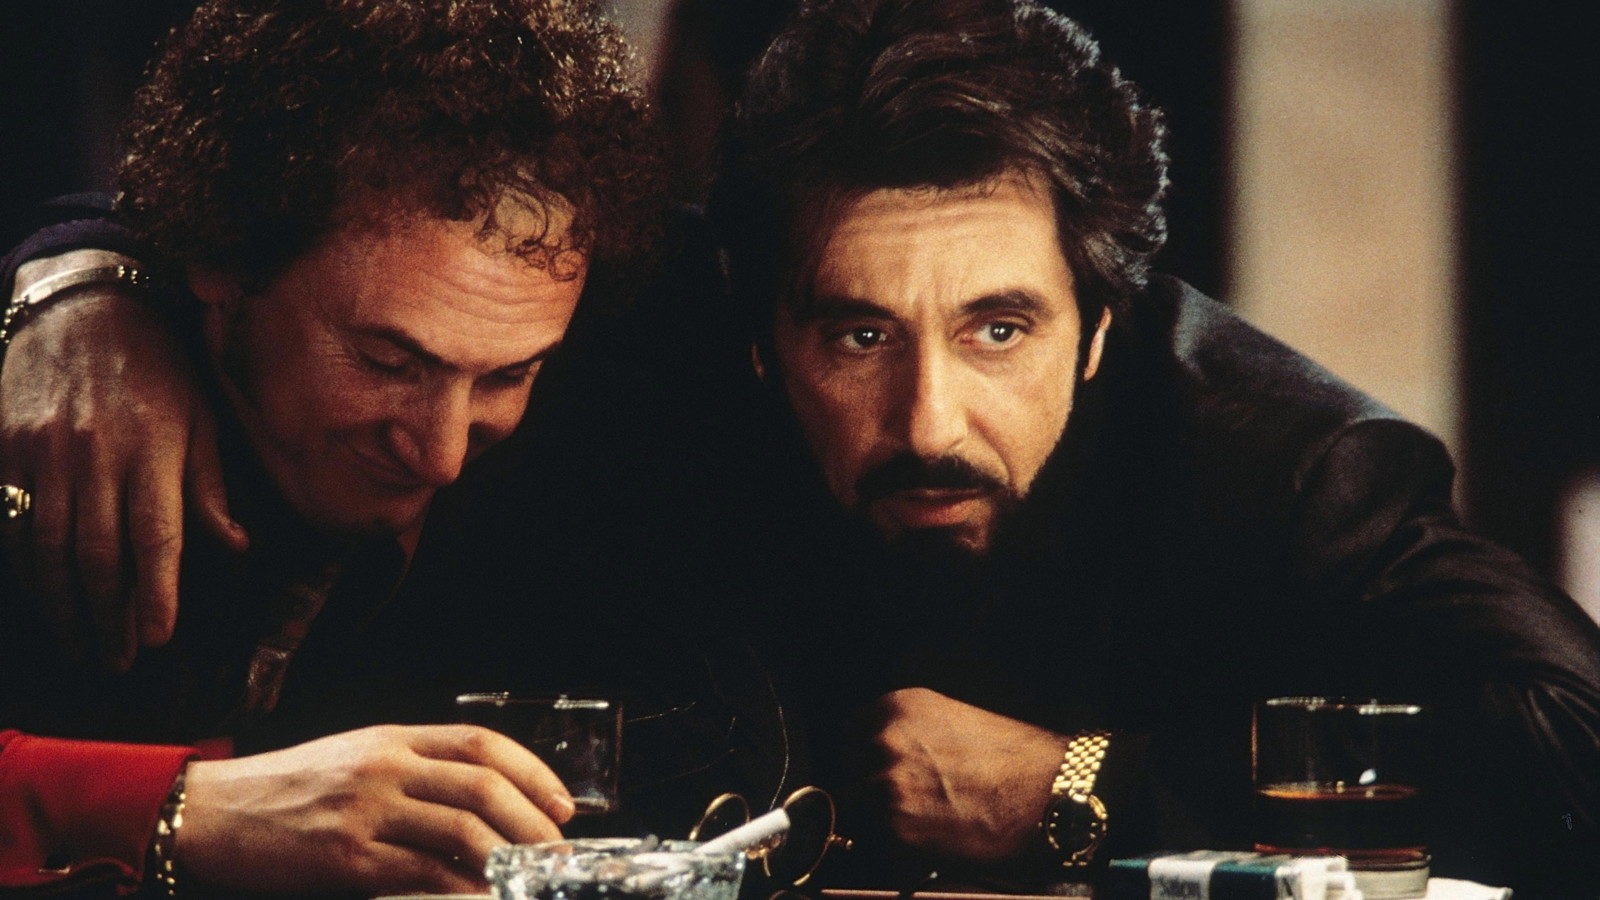 A still from the Brian De Palma's movie 'Carlito's Way'